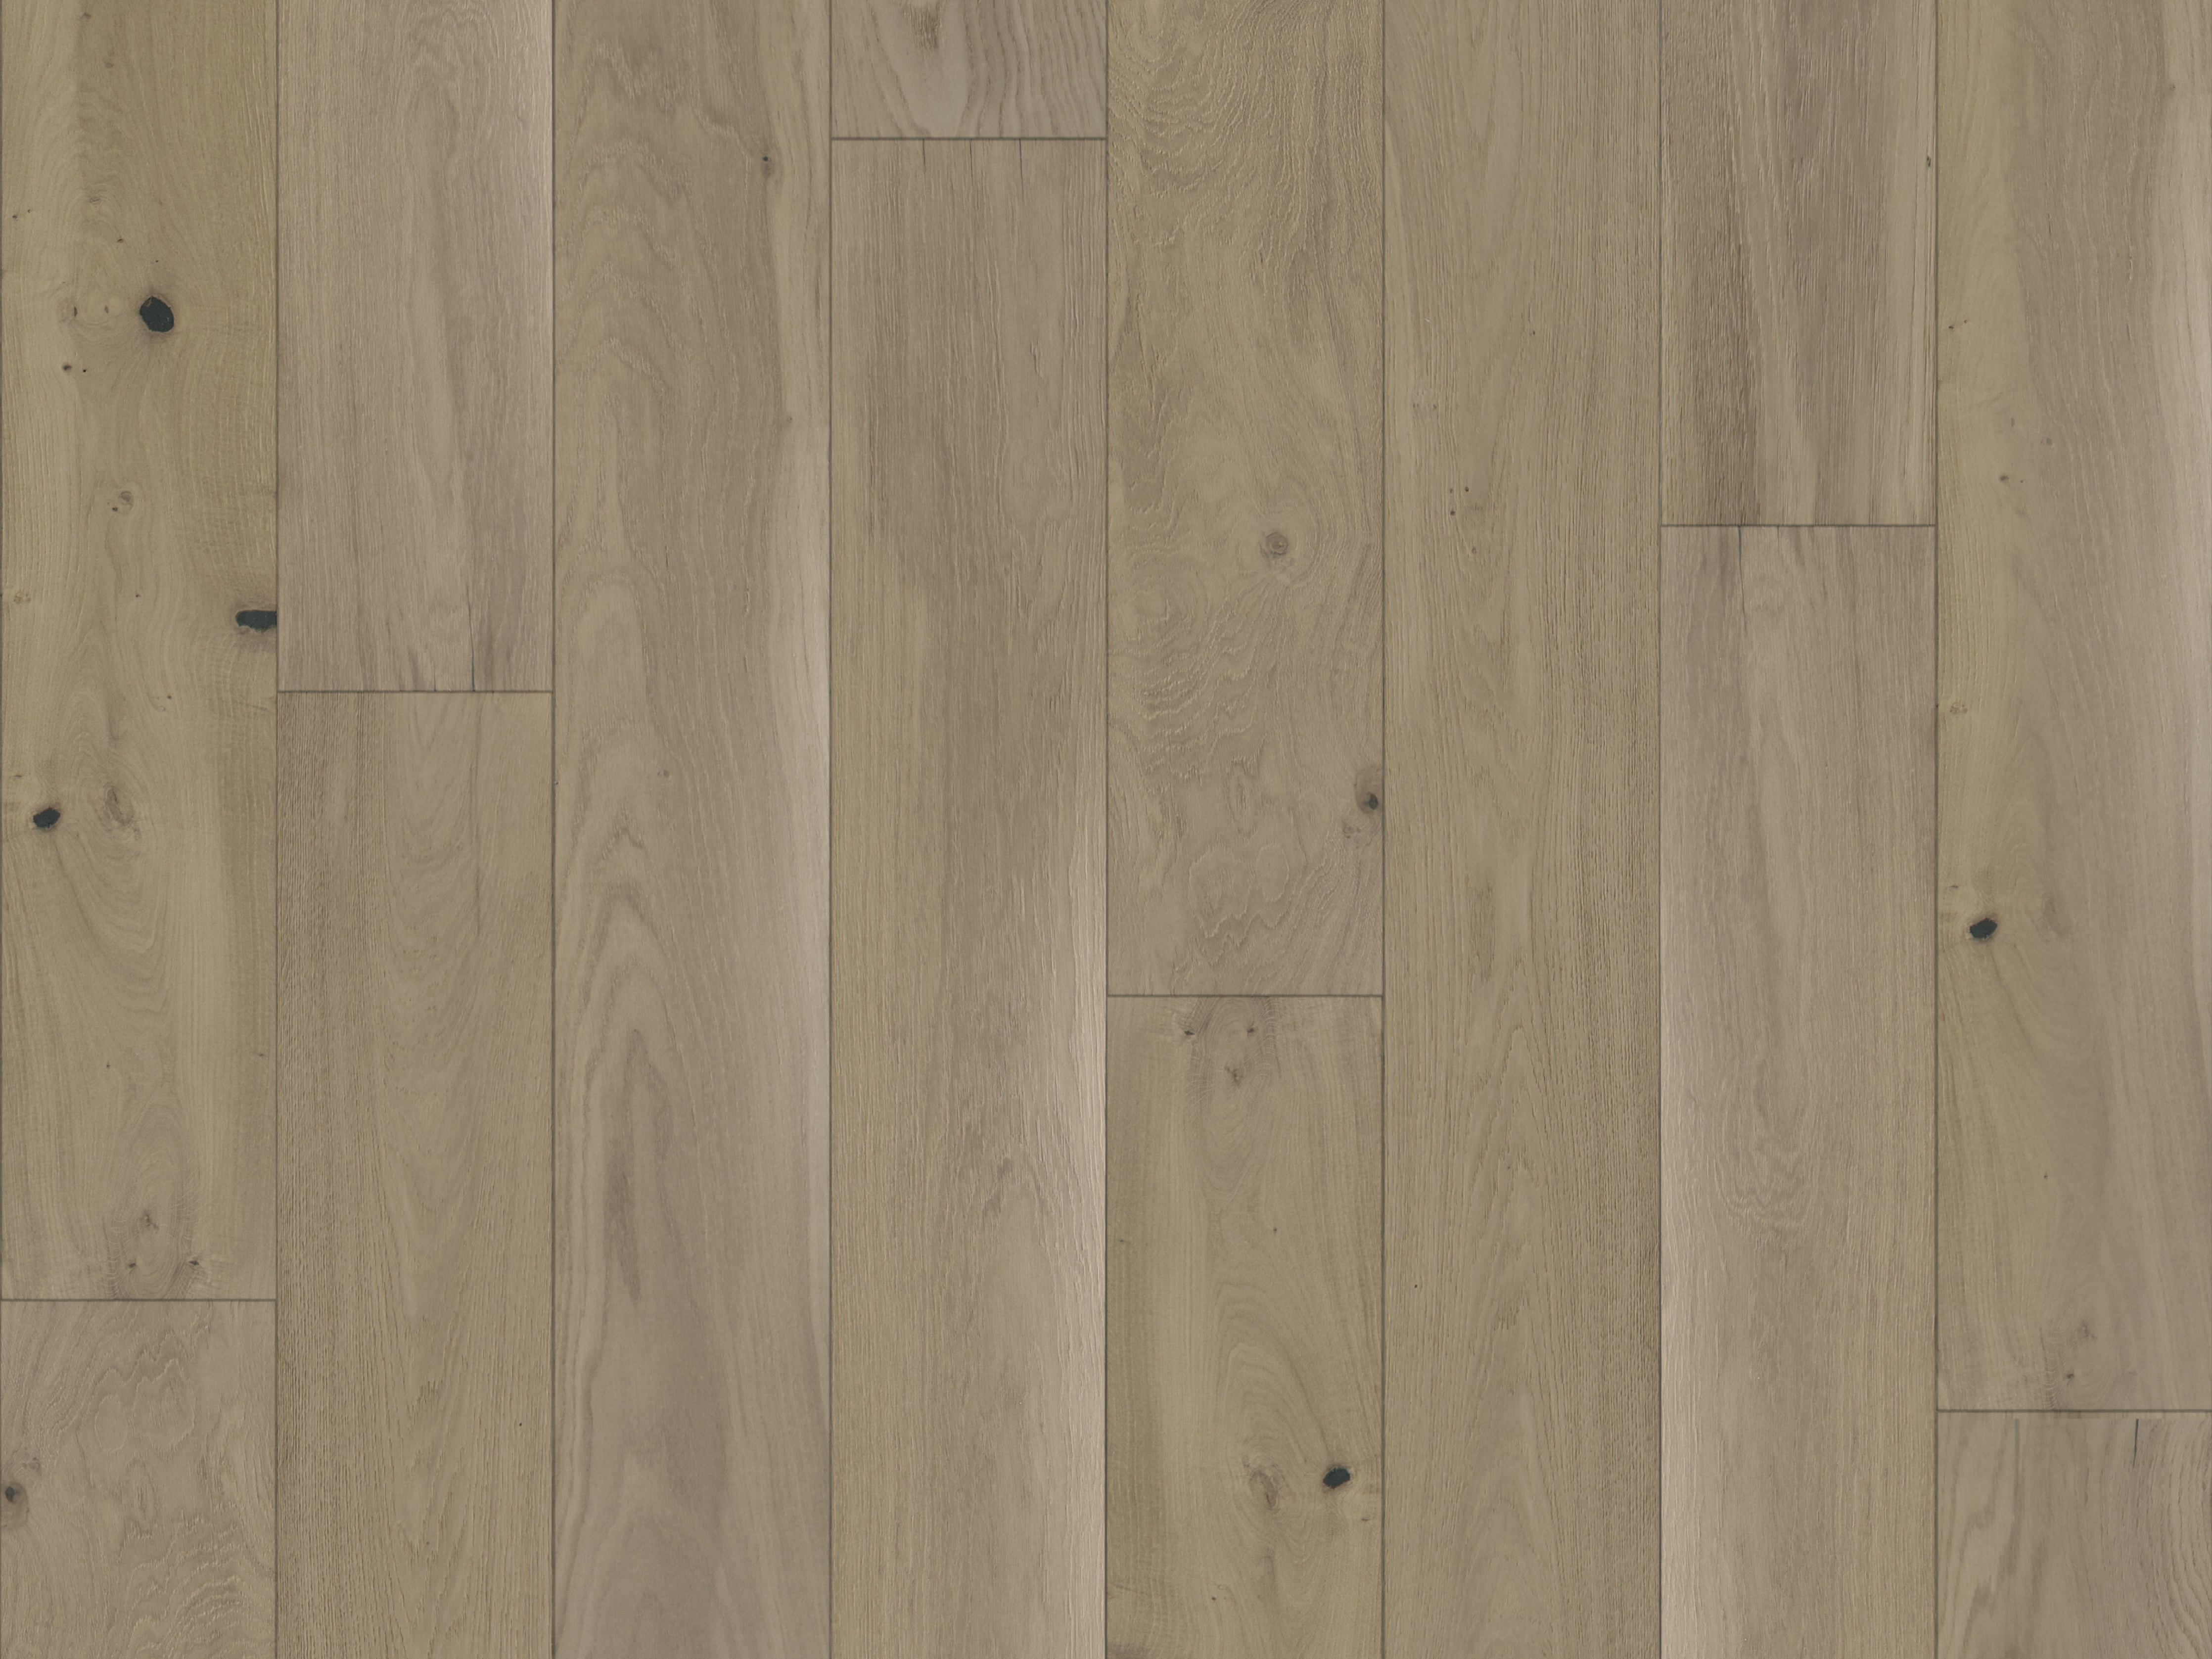 duchateau signature grande savoy vicomte european oak engineered hardnatural wood floor uv oil finish for interior use distributed by surface group international